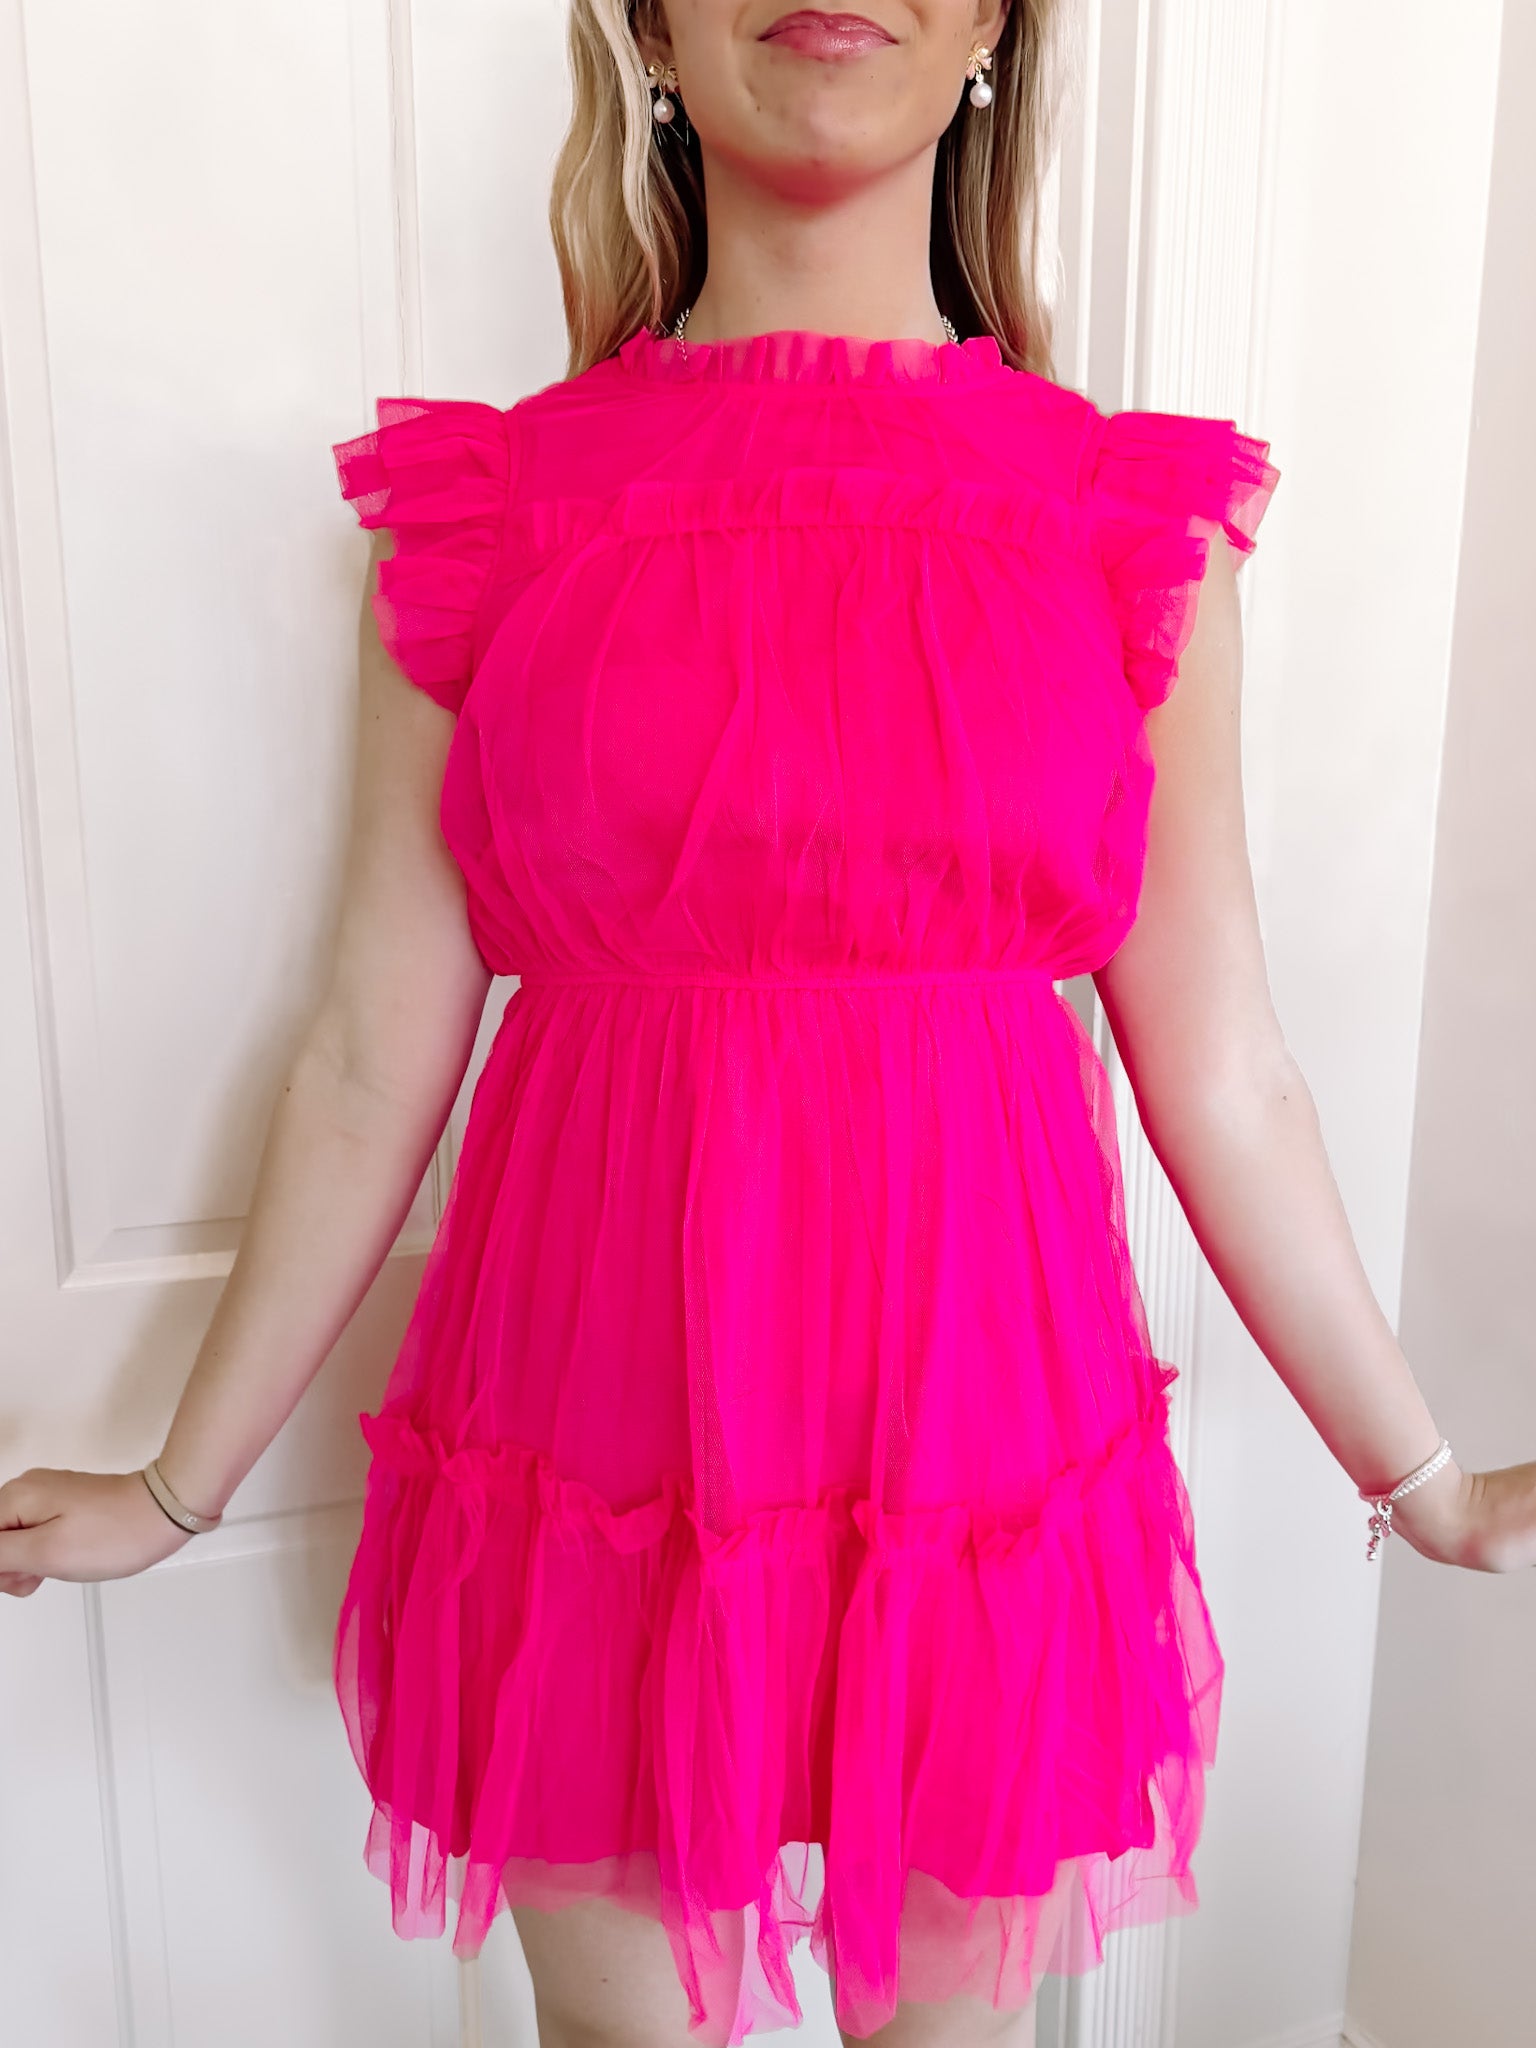 Drop it Like it's Hot Pink Dress | sassyshortcake.com | Sassy Shortcake